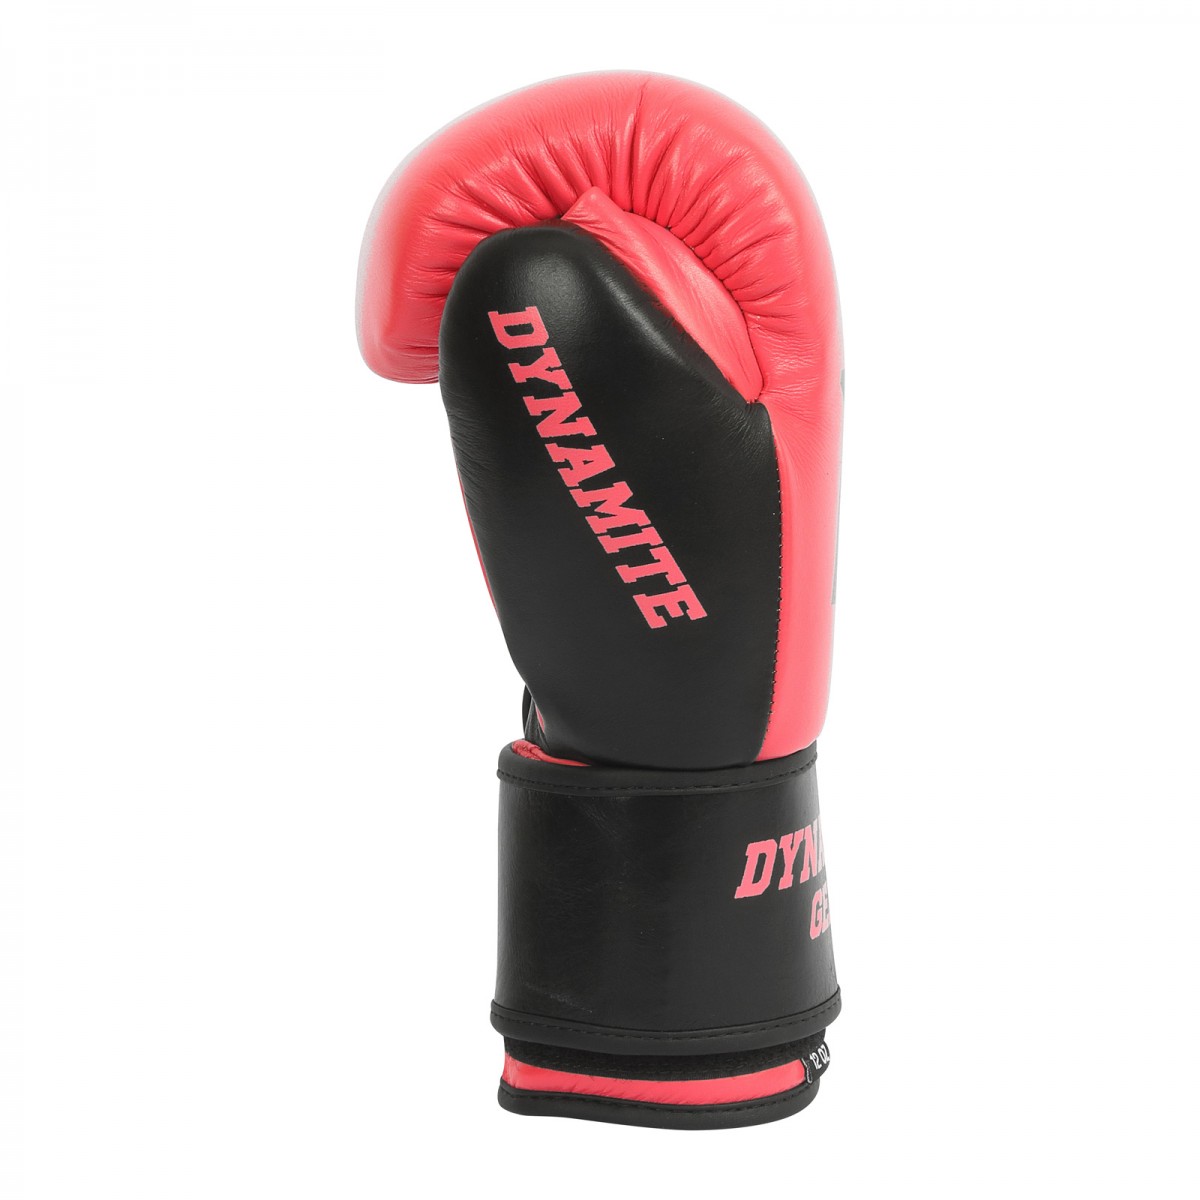 Dynamite Boxing Gloves